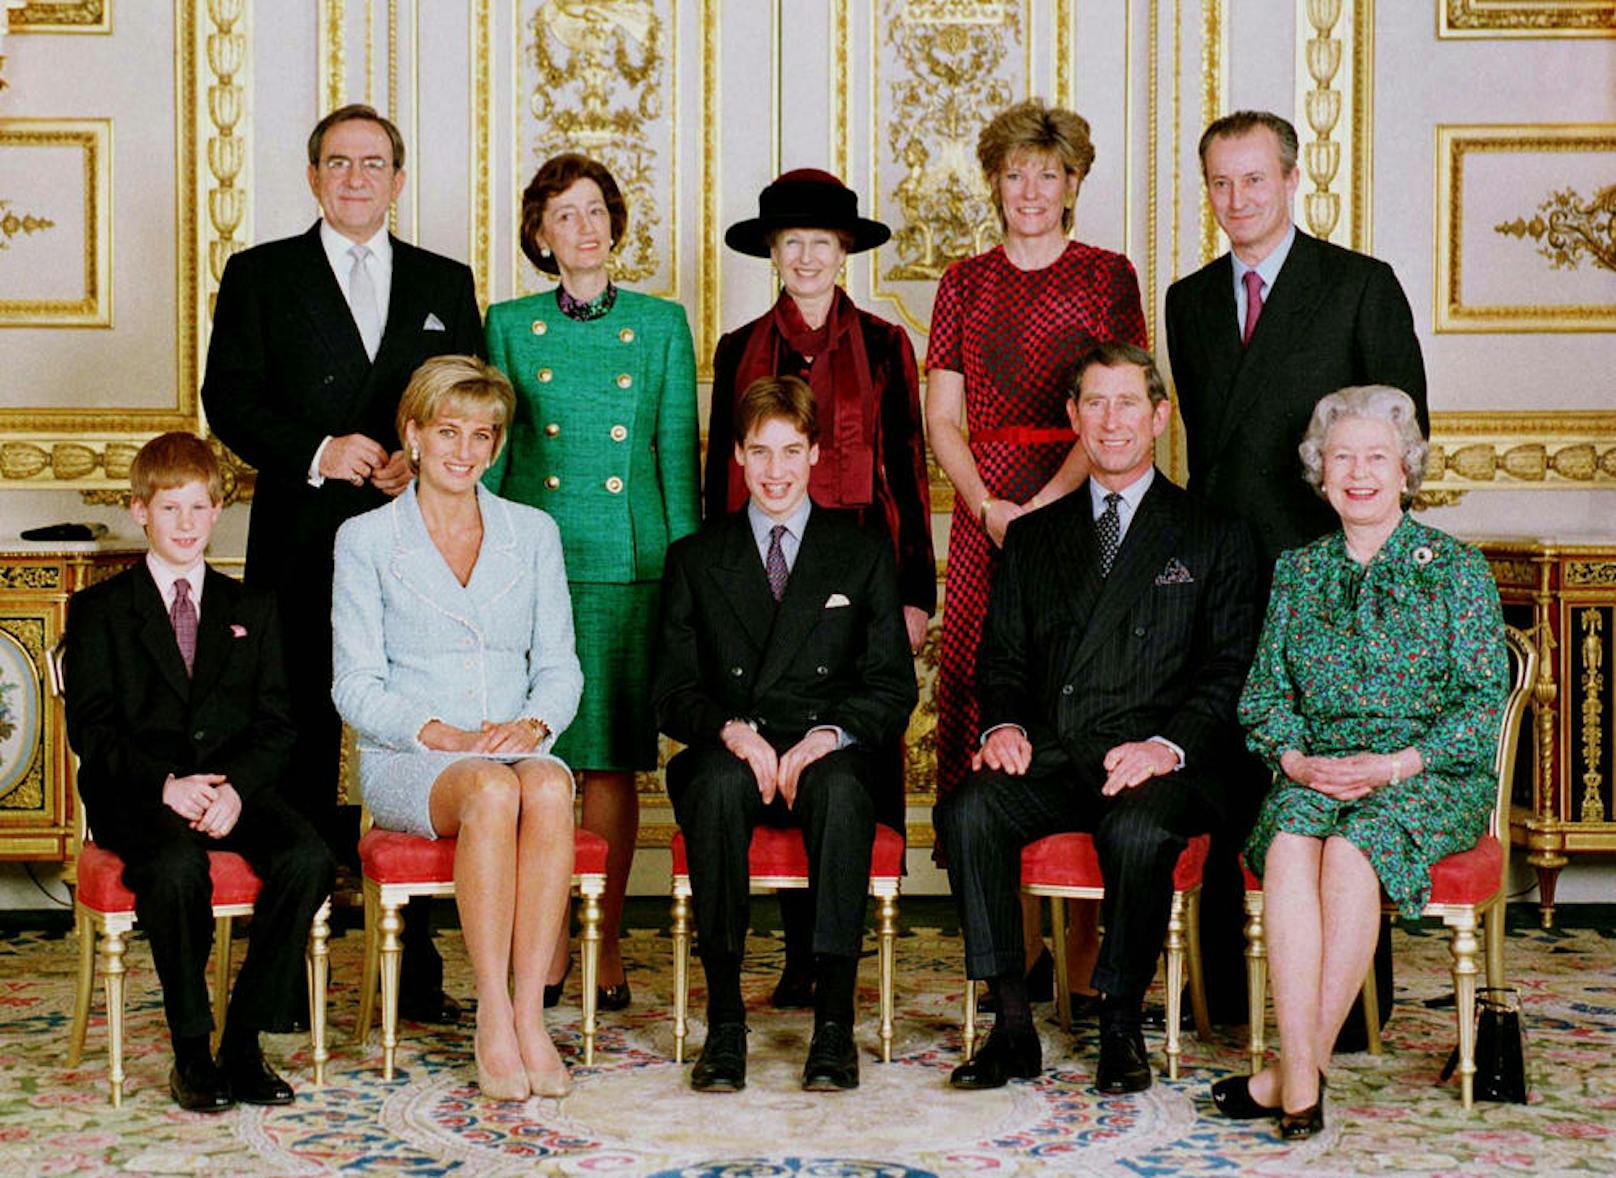 Die britische Royal-Familie posiert für ein Portrait im Windsor Castle. (vordere Reihe von links nach rechts) Prince Harry, Diana Princess of Wales, Prince William, the Prince of Wales, Queen Elizabeth, (hintere Reihe von links nach rechts) King Constatine of Greece, Lady Susan Hussey, Princess Alexandra, the Duchess of Westminster und Lord Romsey.